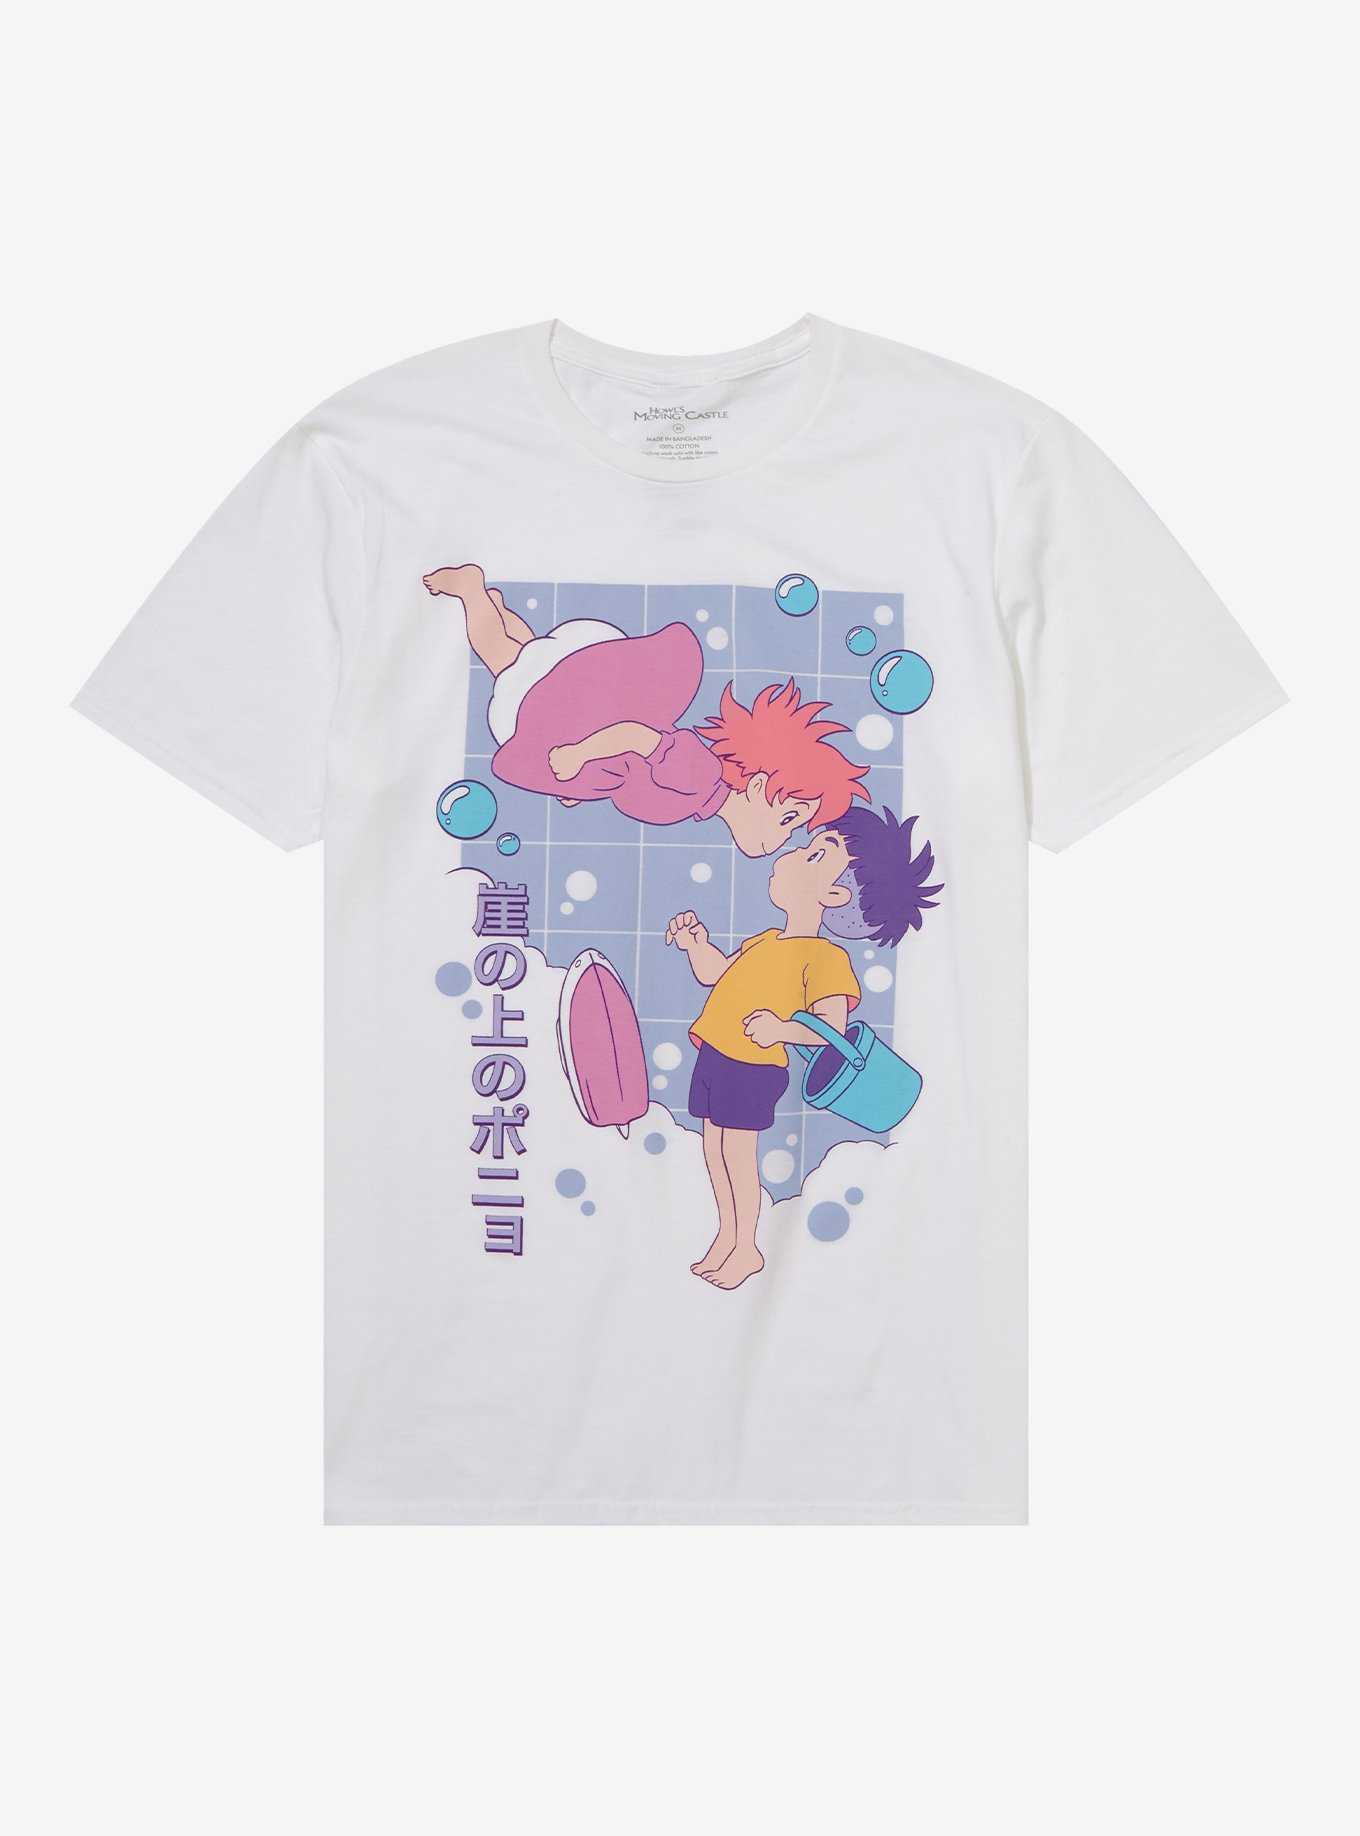 Studio Ghibli Ponyo Pastel Grid Boyfriend Fit Girls T-Shirt, , hi-res